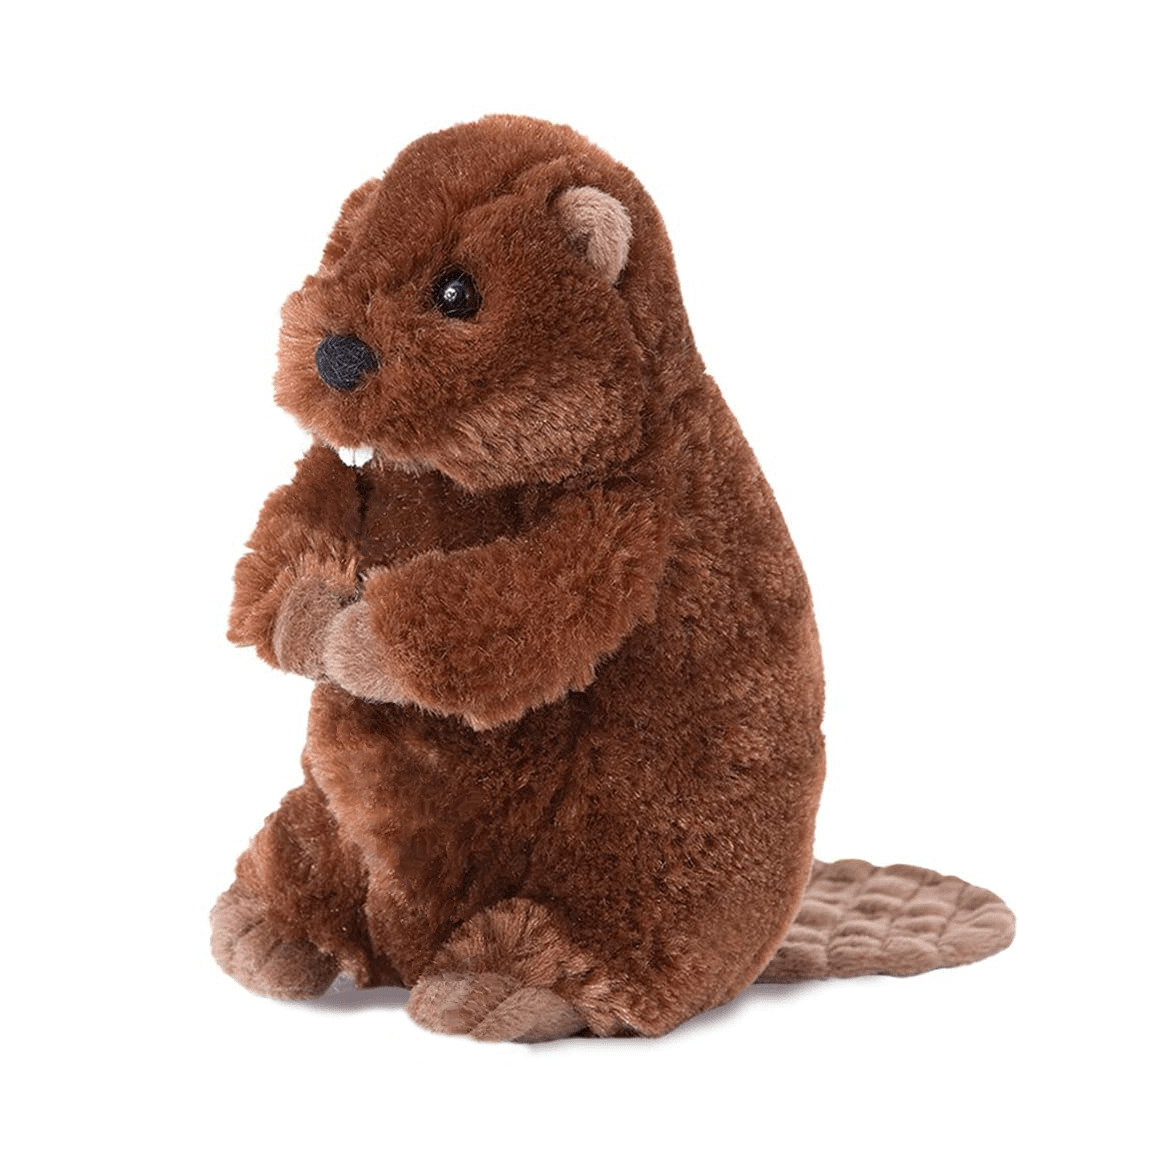 BUDDY the Plush BEAVER Stuffed Animal - by Douglas Cuddle Toys - #4037